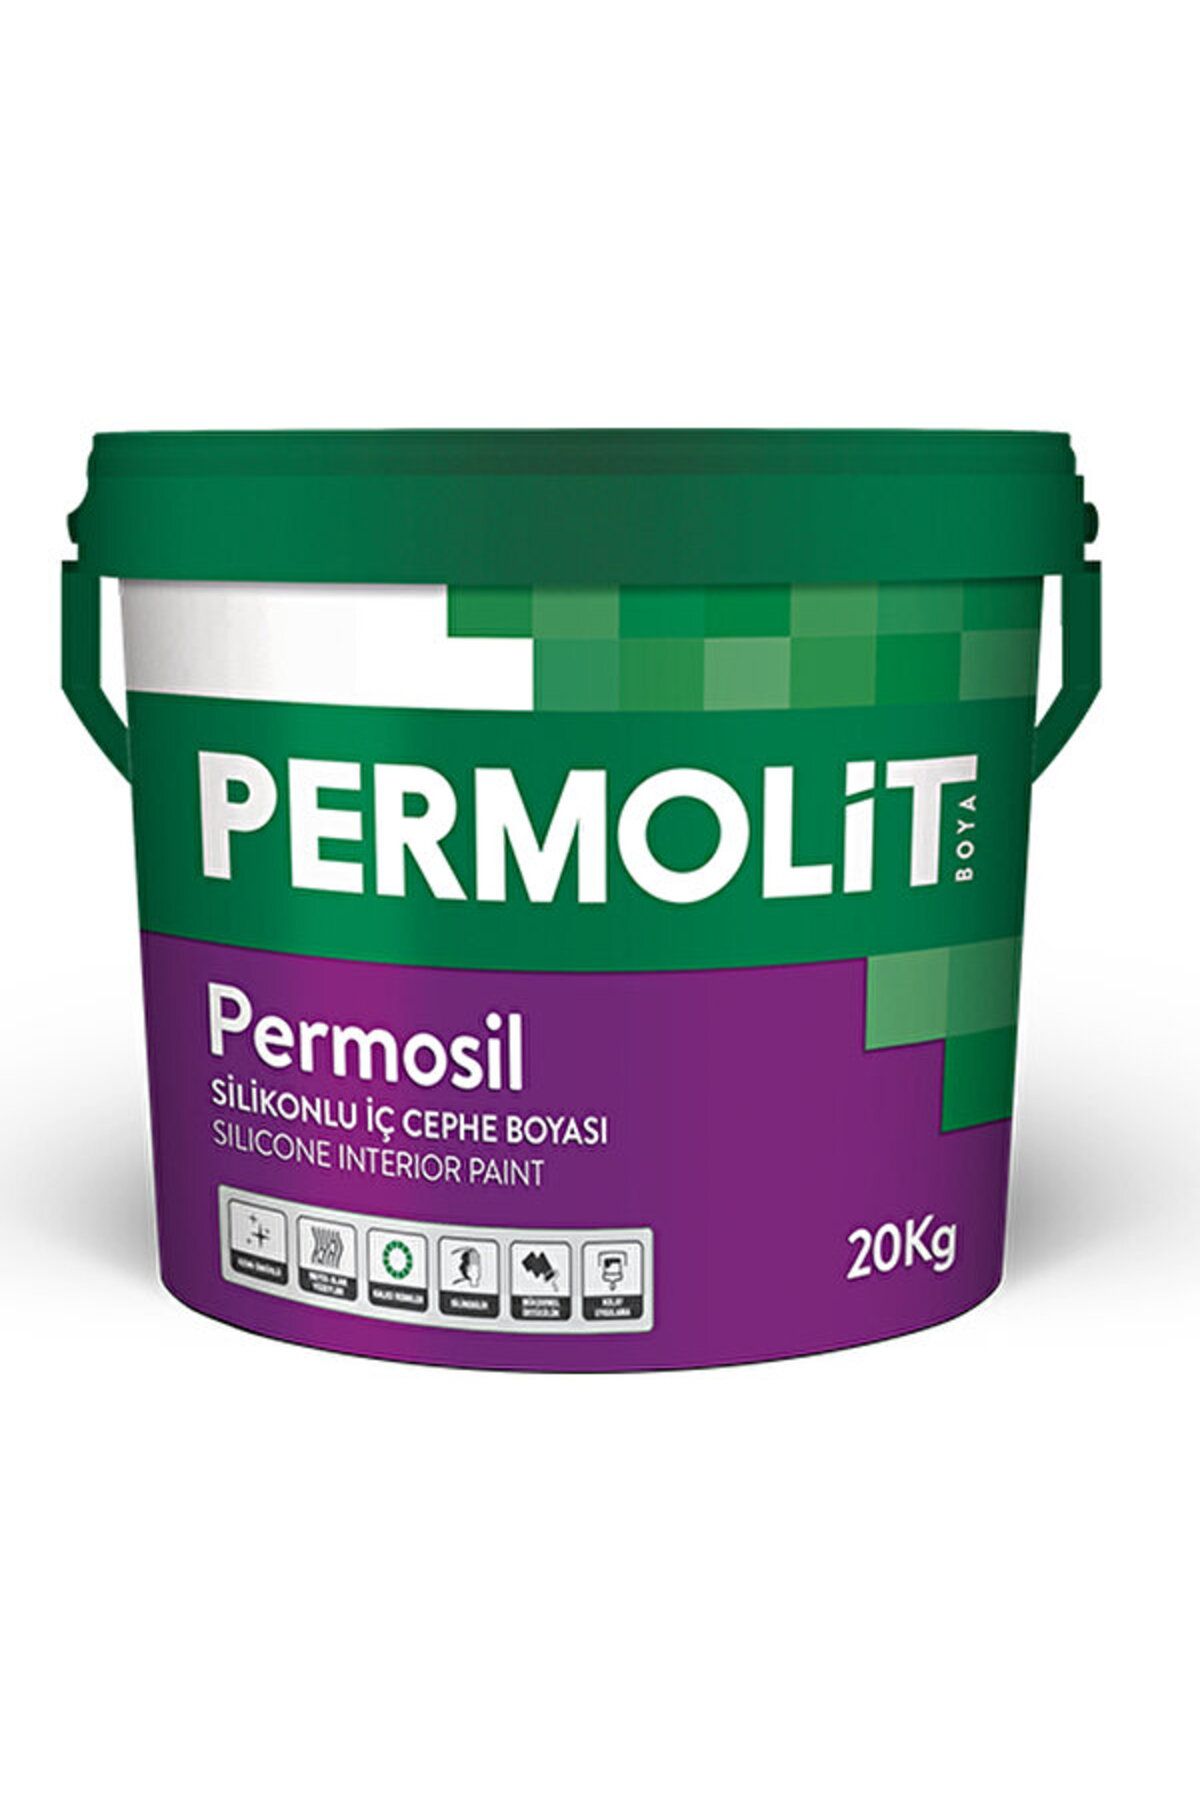 Permolit Permosil Silikonlu Iç Cephe  3101-PAMUK Şekeri 3,5 kg